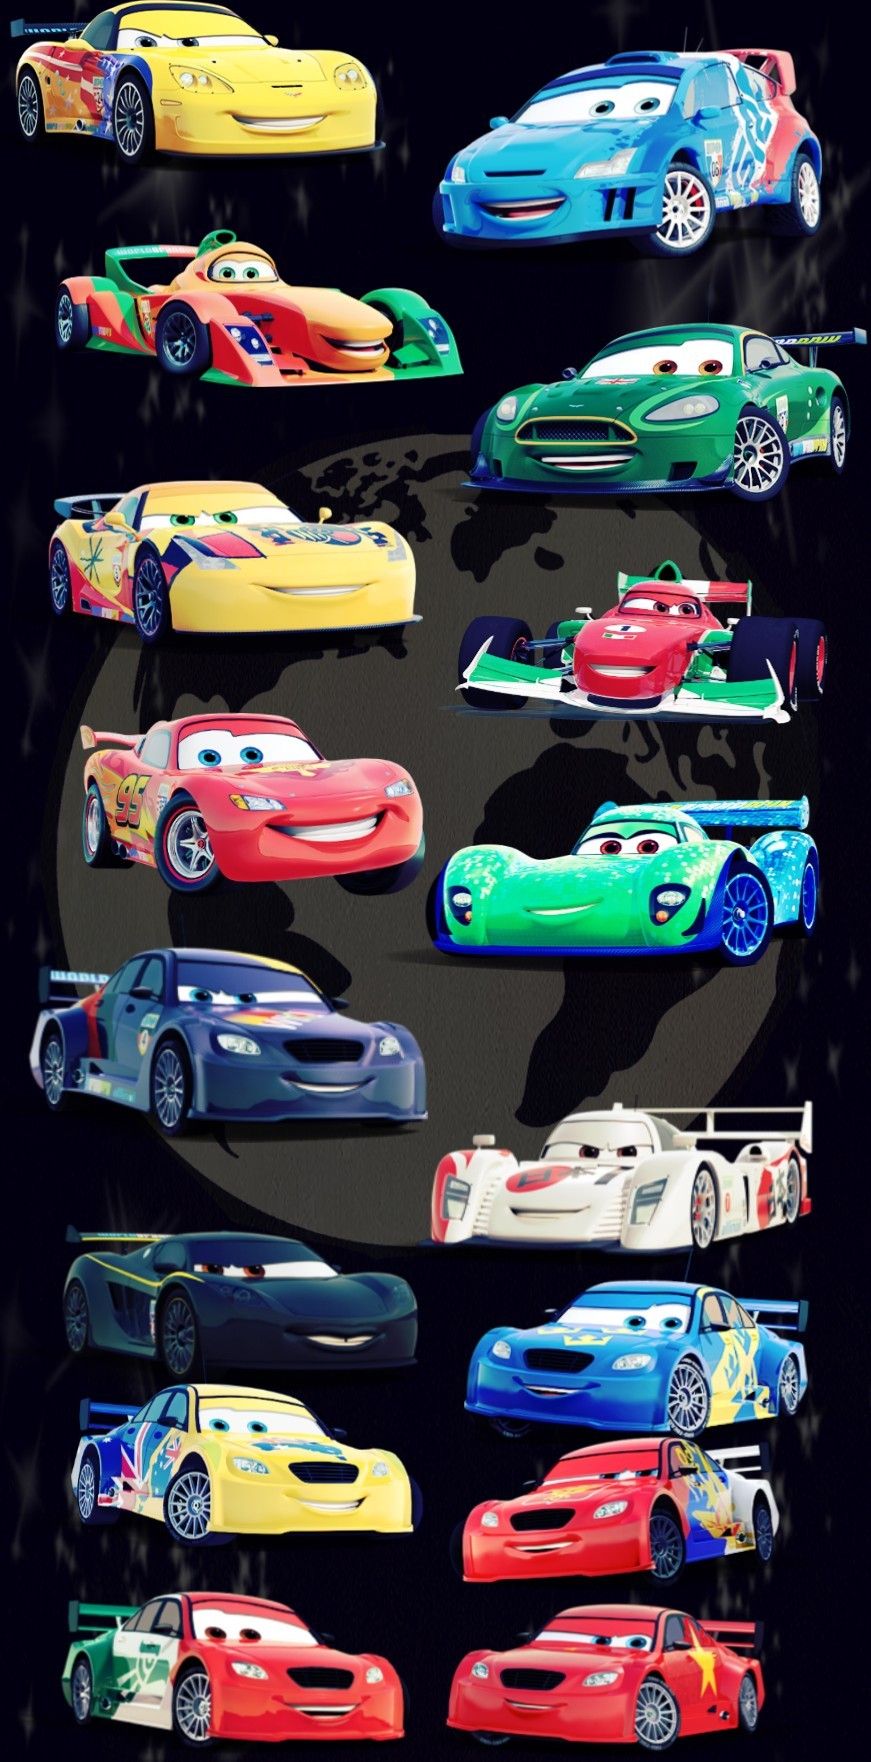 Disney Cars 2 Racers. Disney cars wallpaper, Disney cars, Disney pixar cars